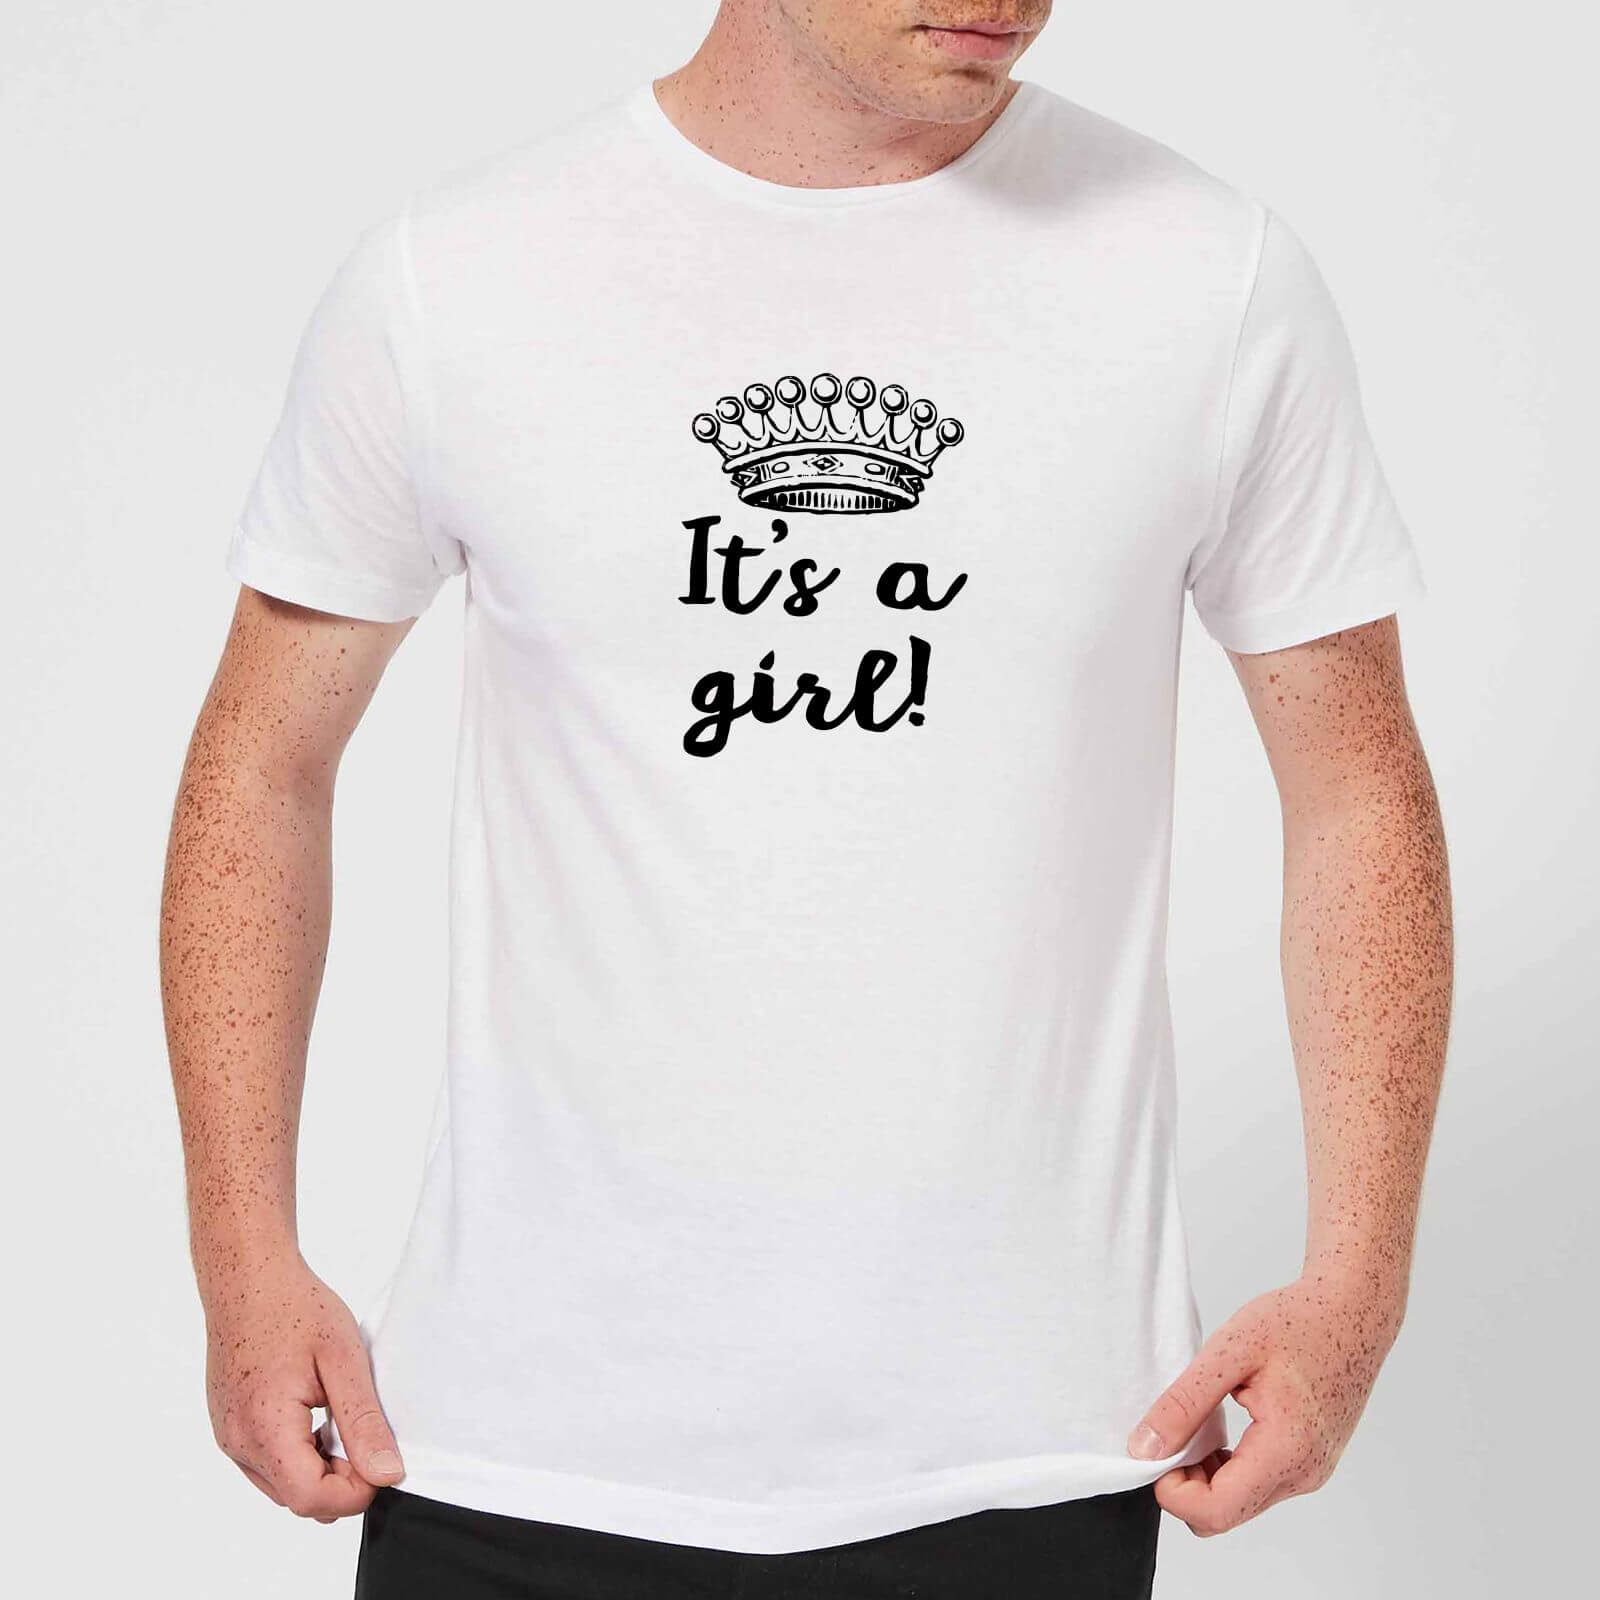 It's A Girl Men's T-Shirt - White - L - White